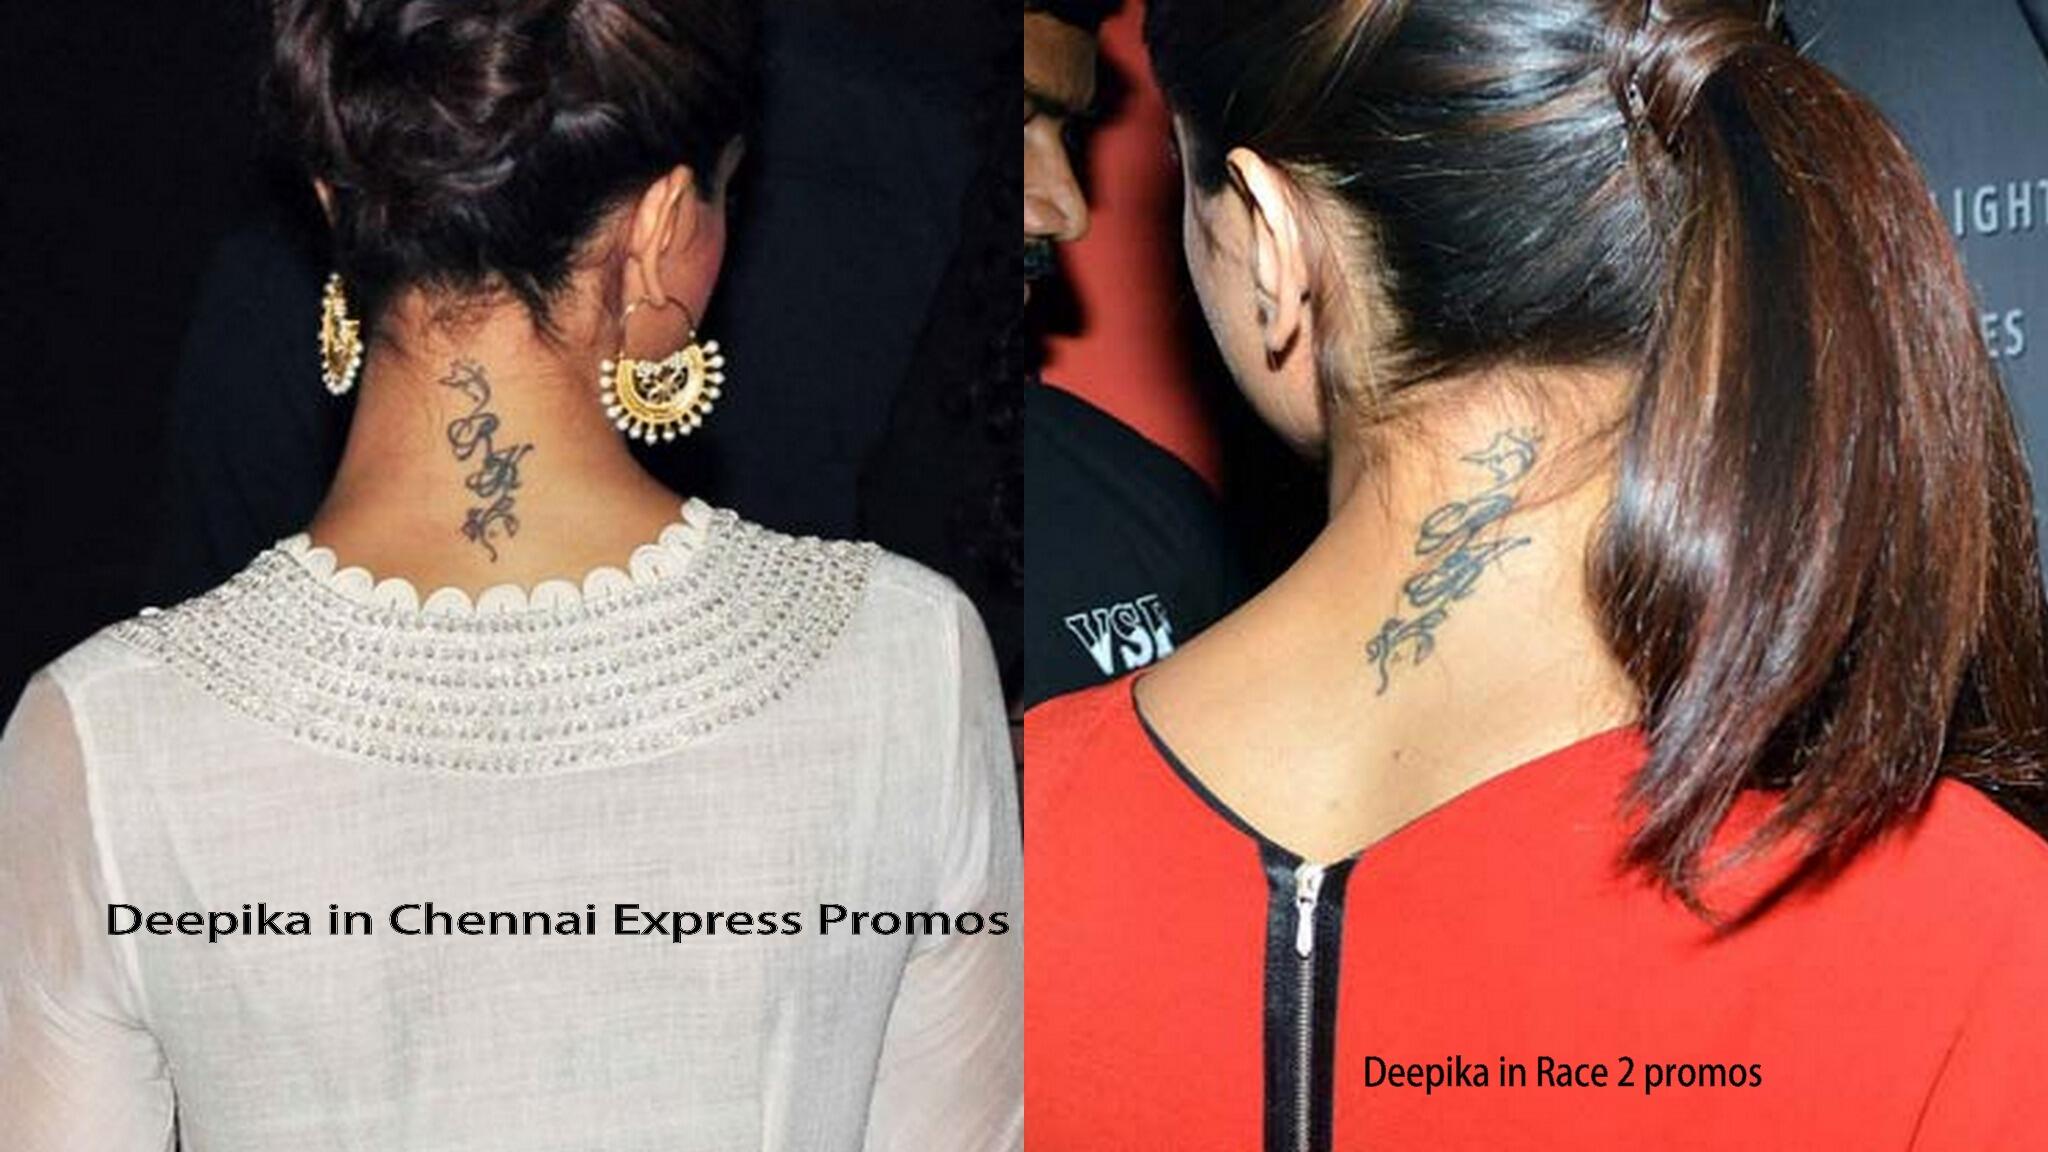 Video Deepika Padukone on the mystery of RK tattoo Im not sure  Hindi  Movie News  Times of India